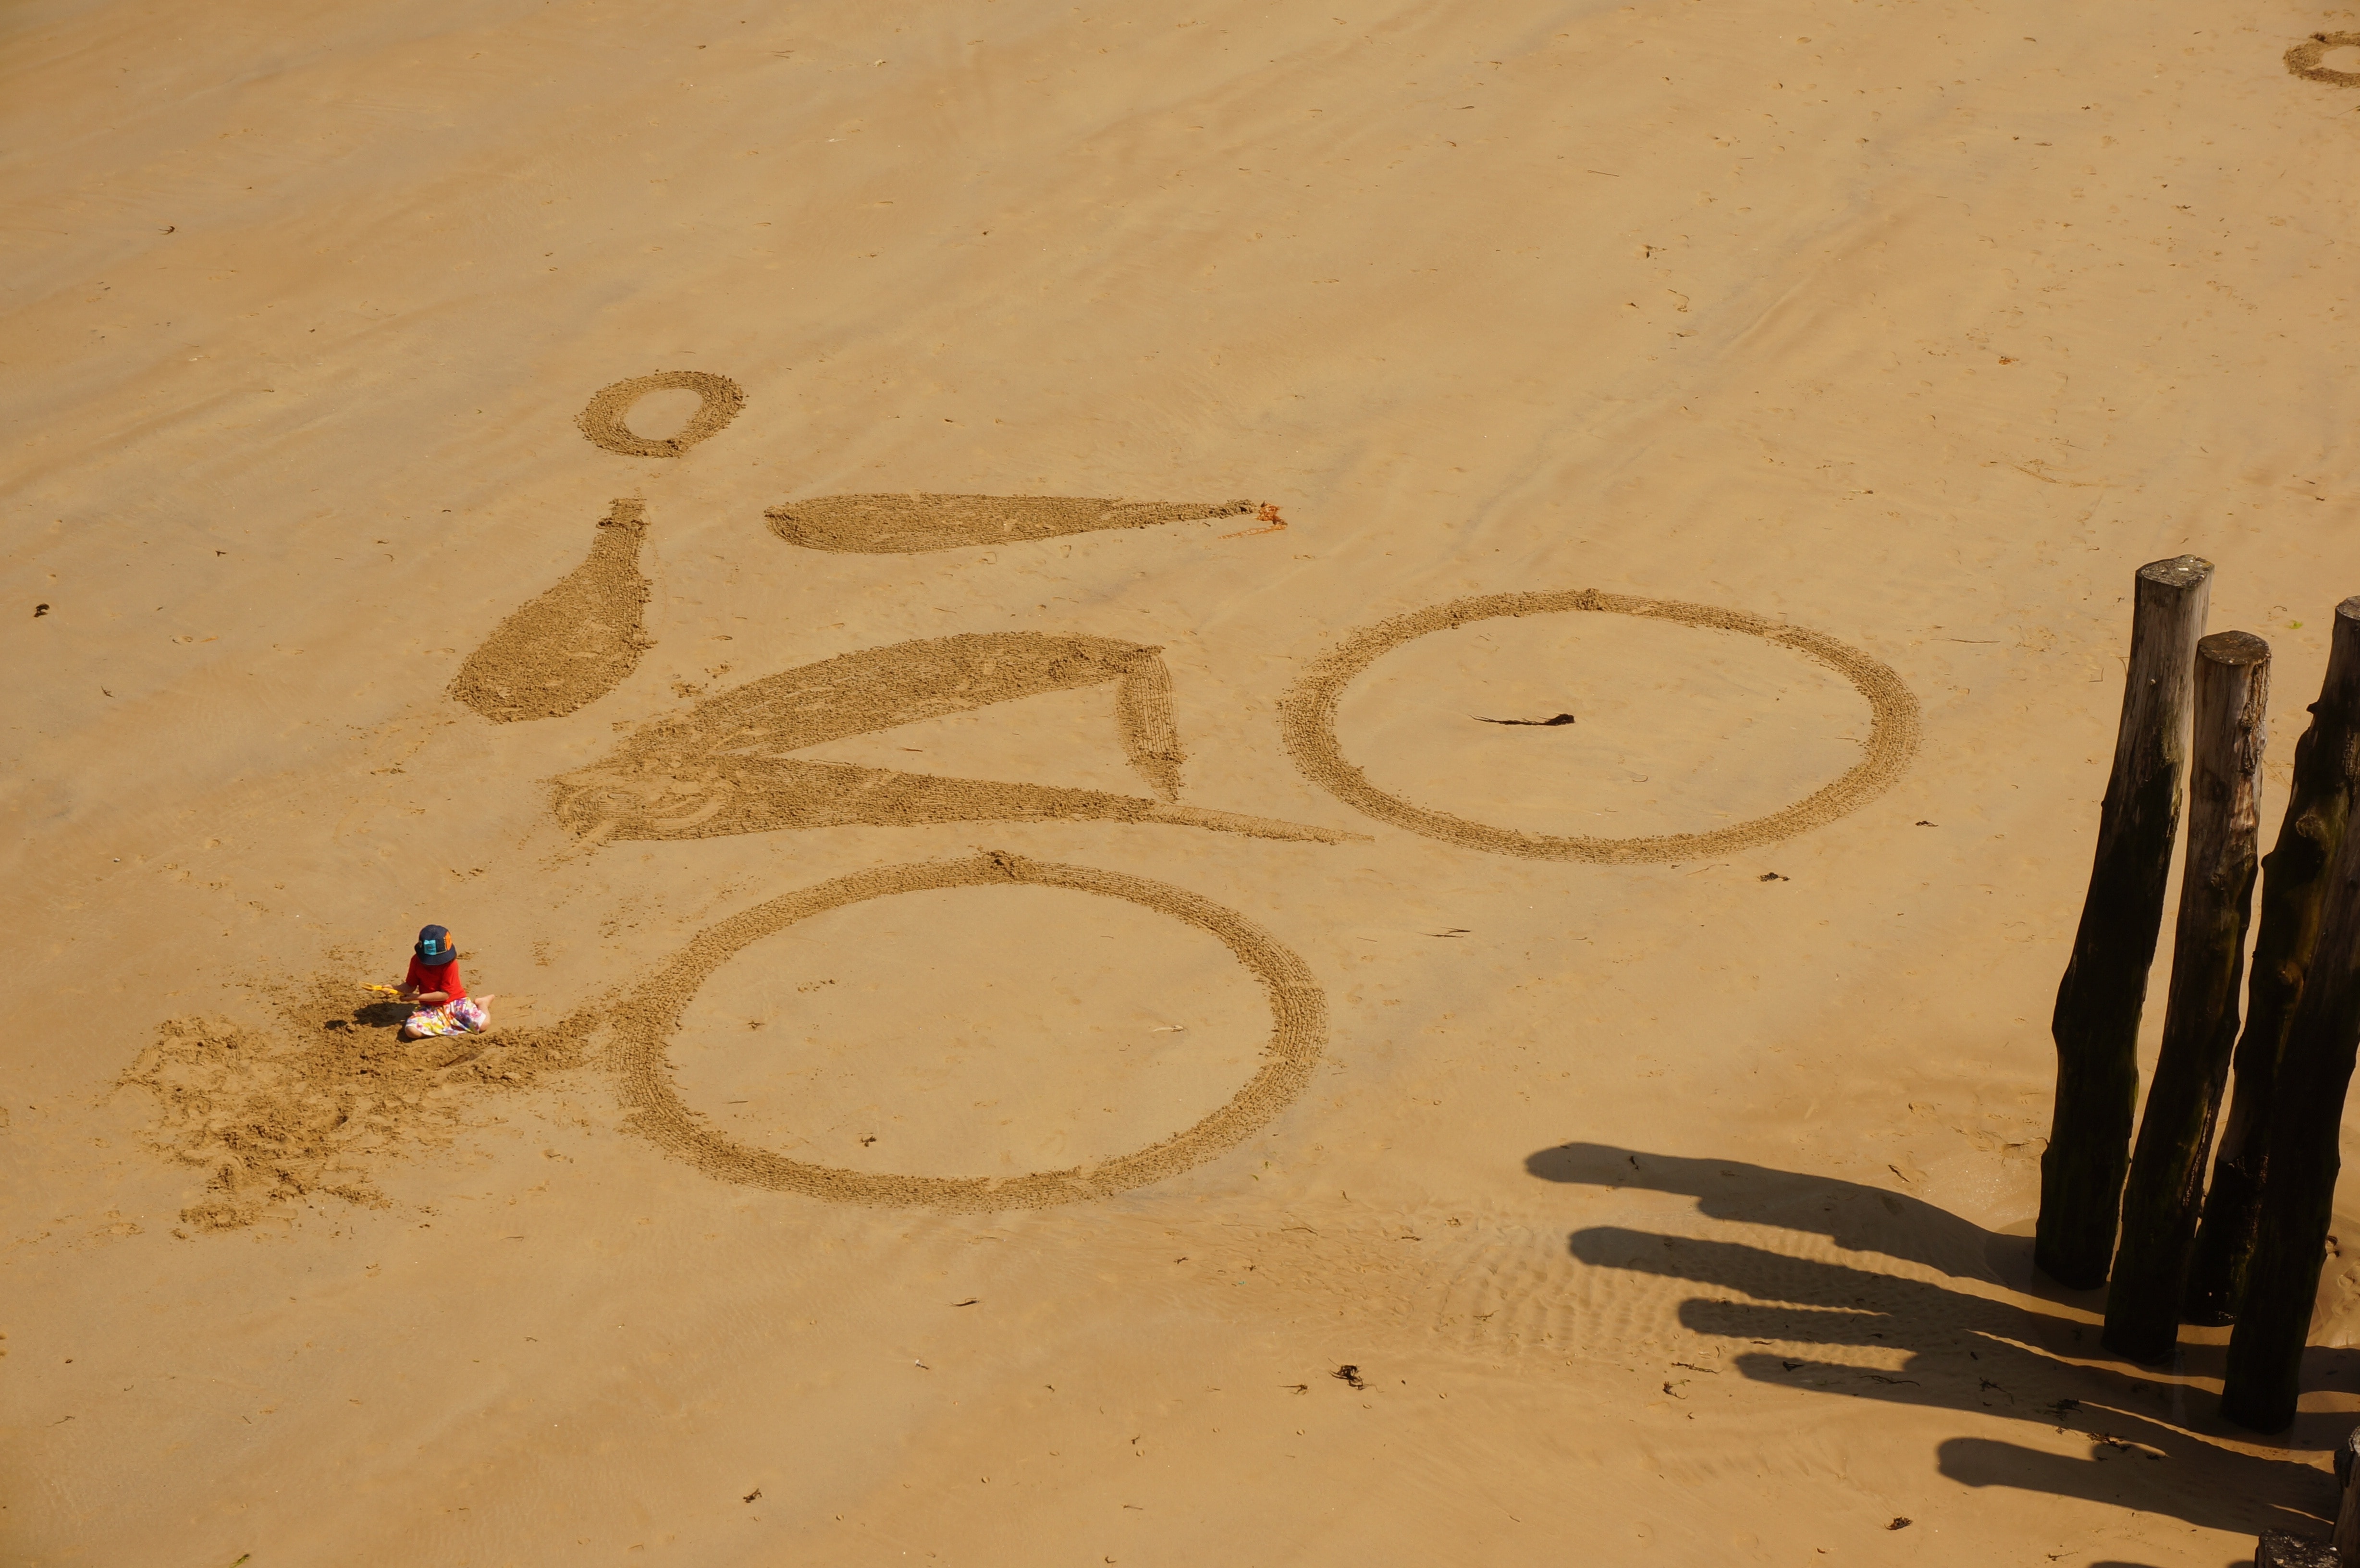 man riding bike sand-shape at daytime